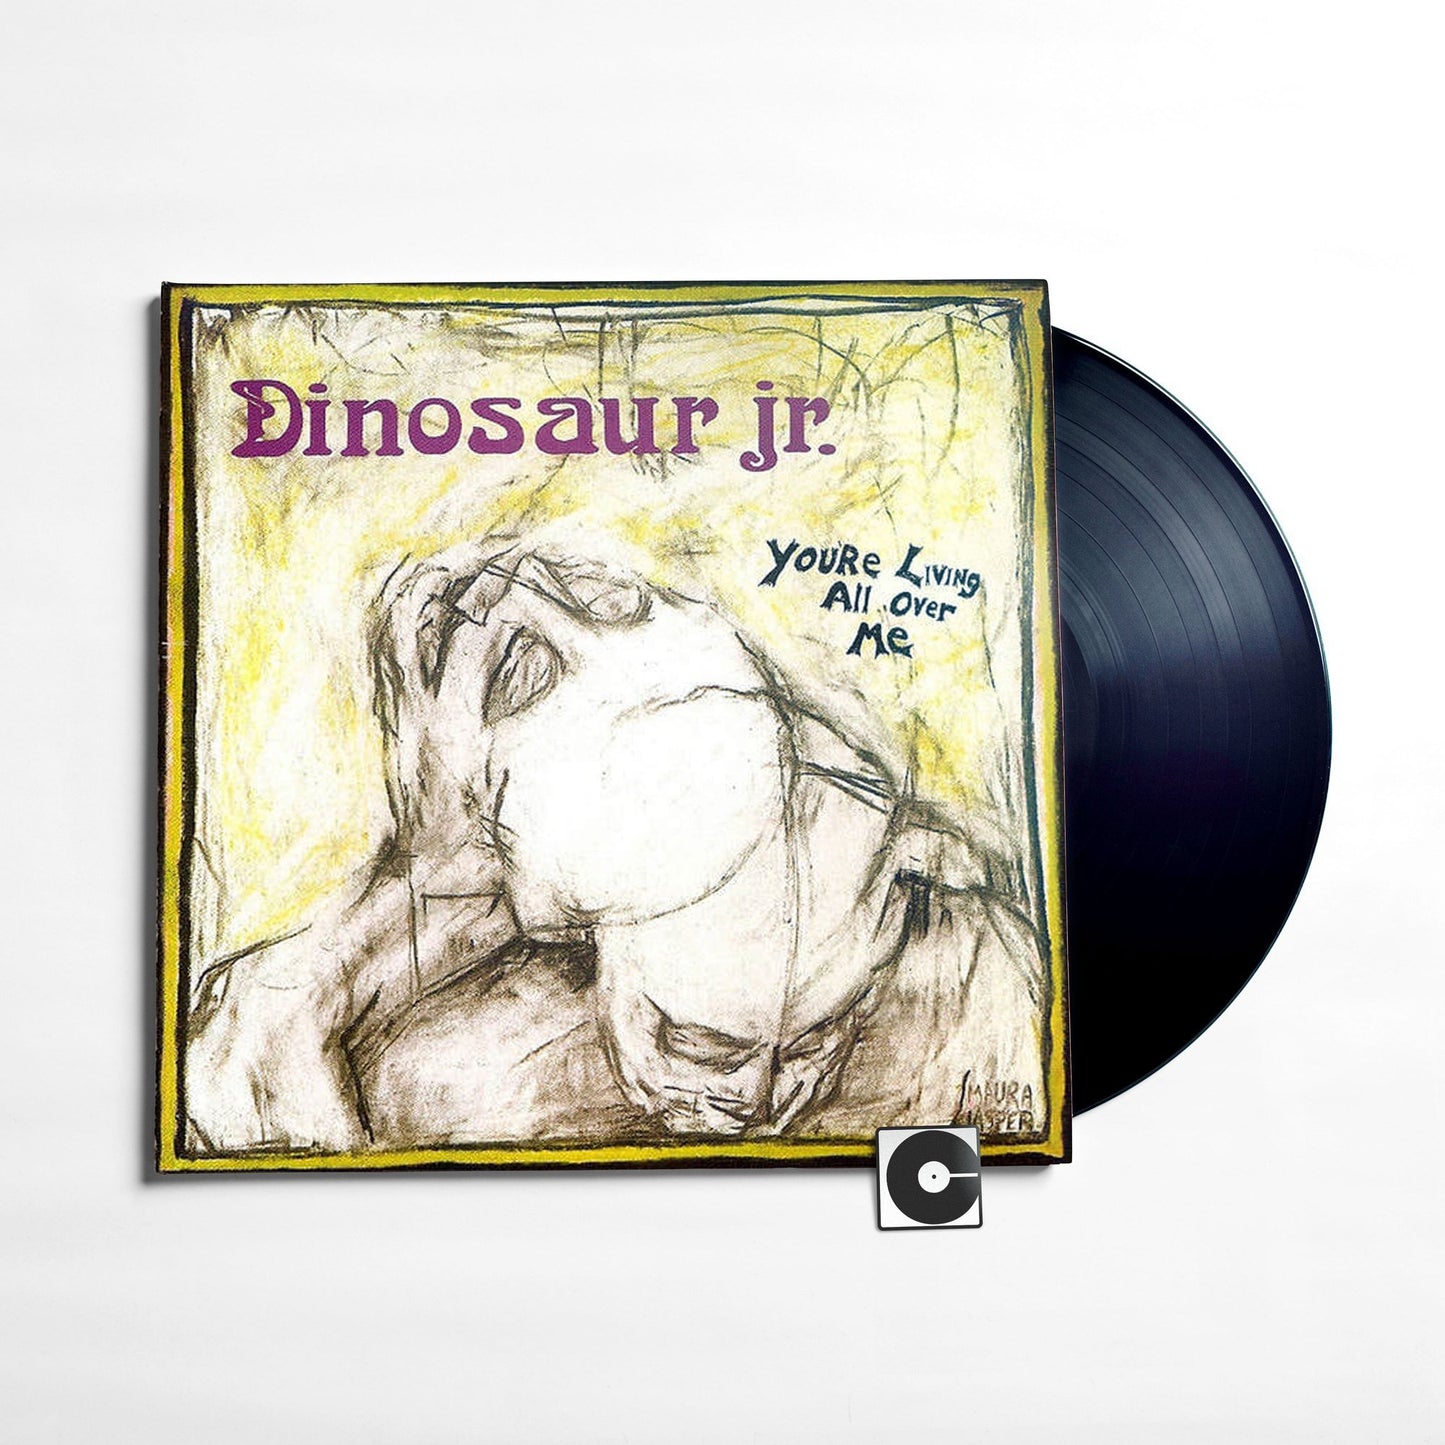 Dinosaur Jr. - "You're Living All Over Me"